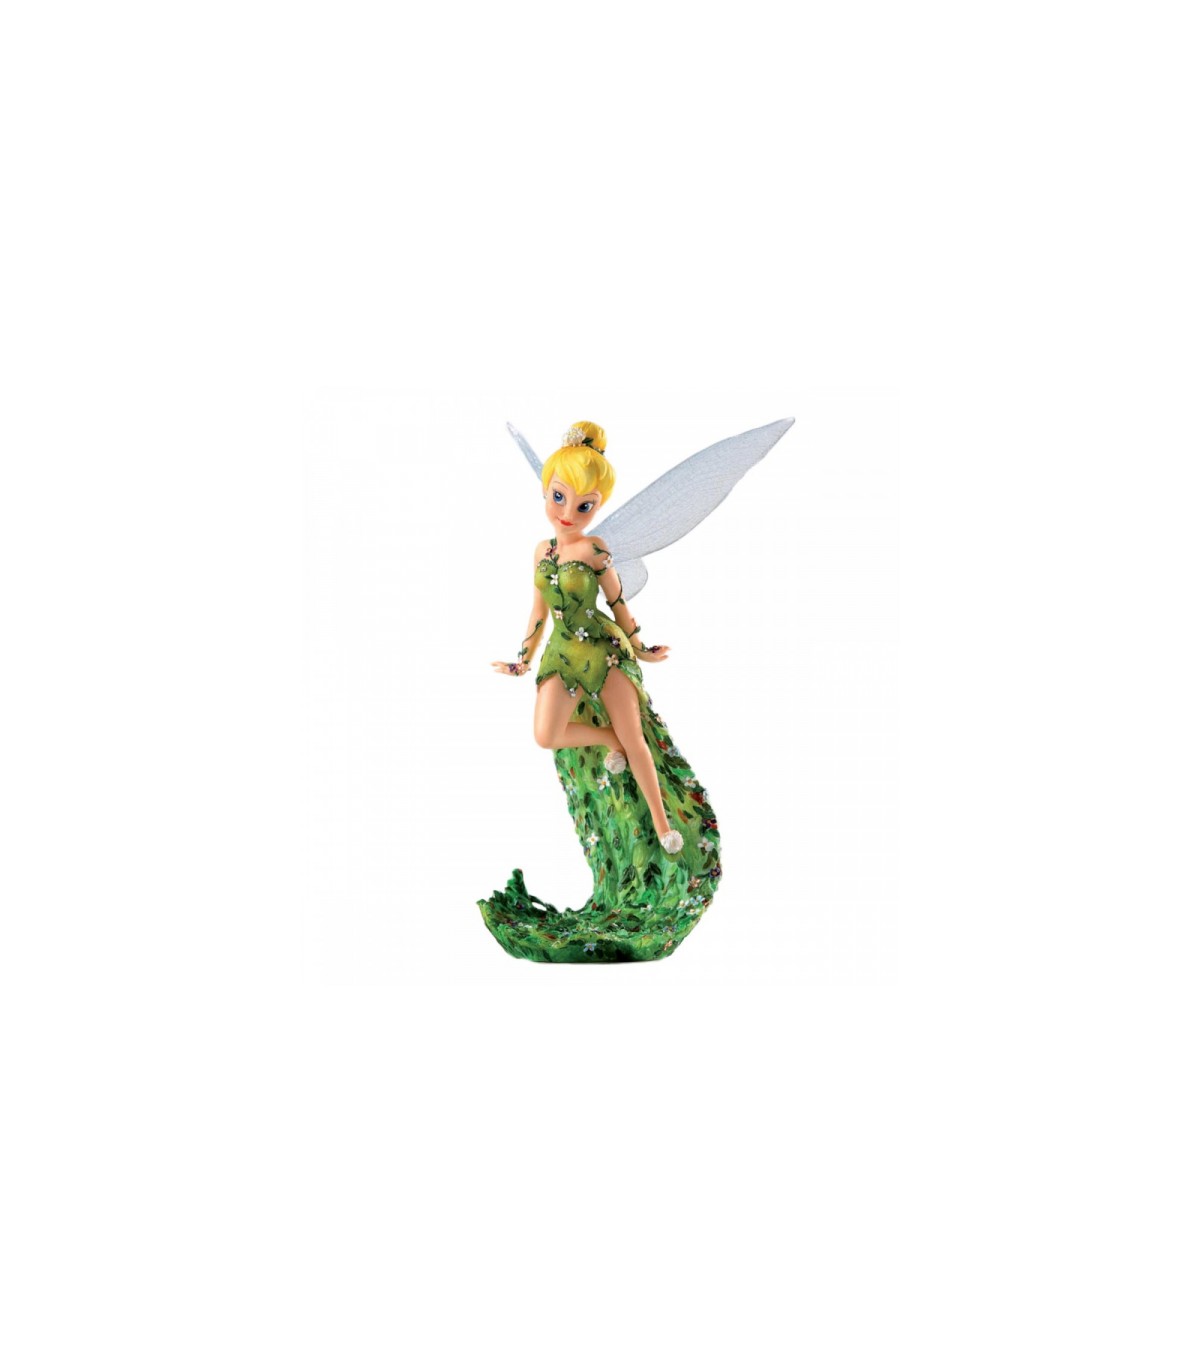 Figura Campanilla Disney Characters Peter Pan, · Figura de Peter Pan ·  Personaje: Campanilla · Fabricante: Sega · Tamaño aprox.: 20cm · Ficha de  la figura